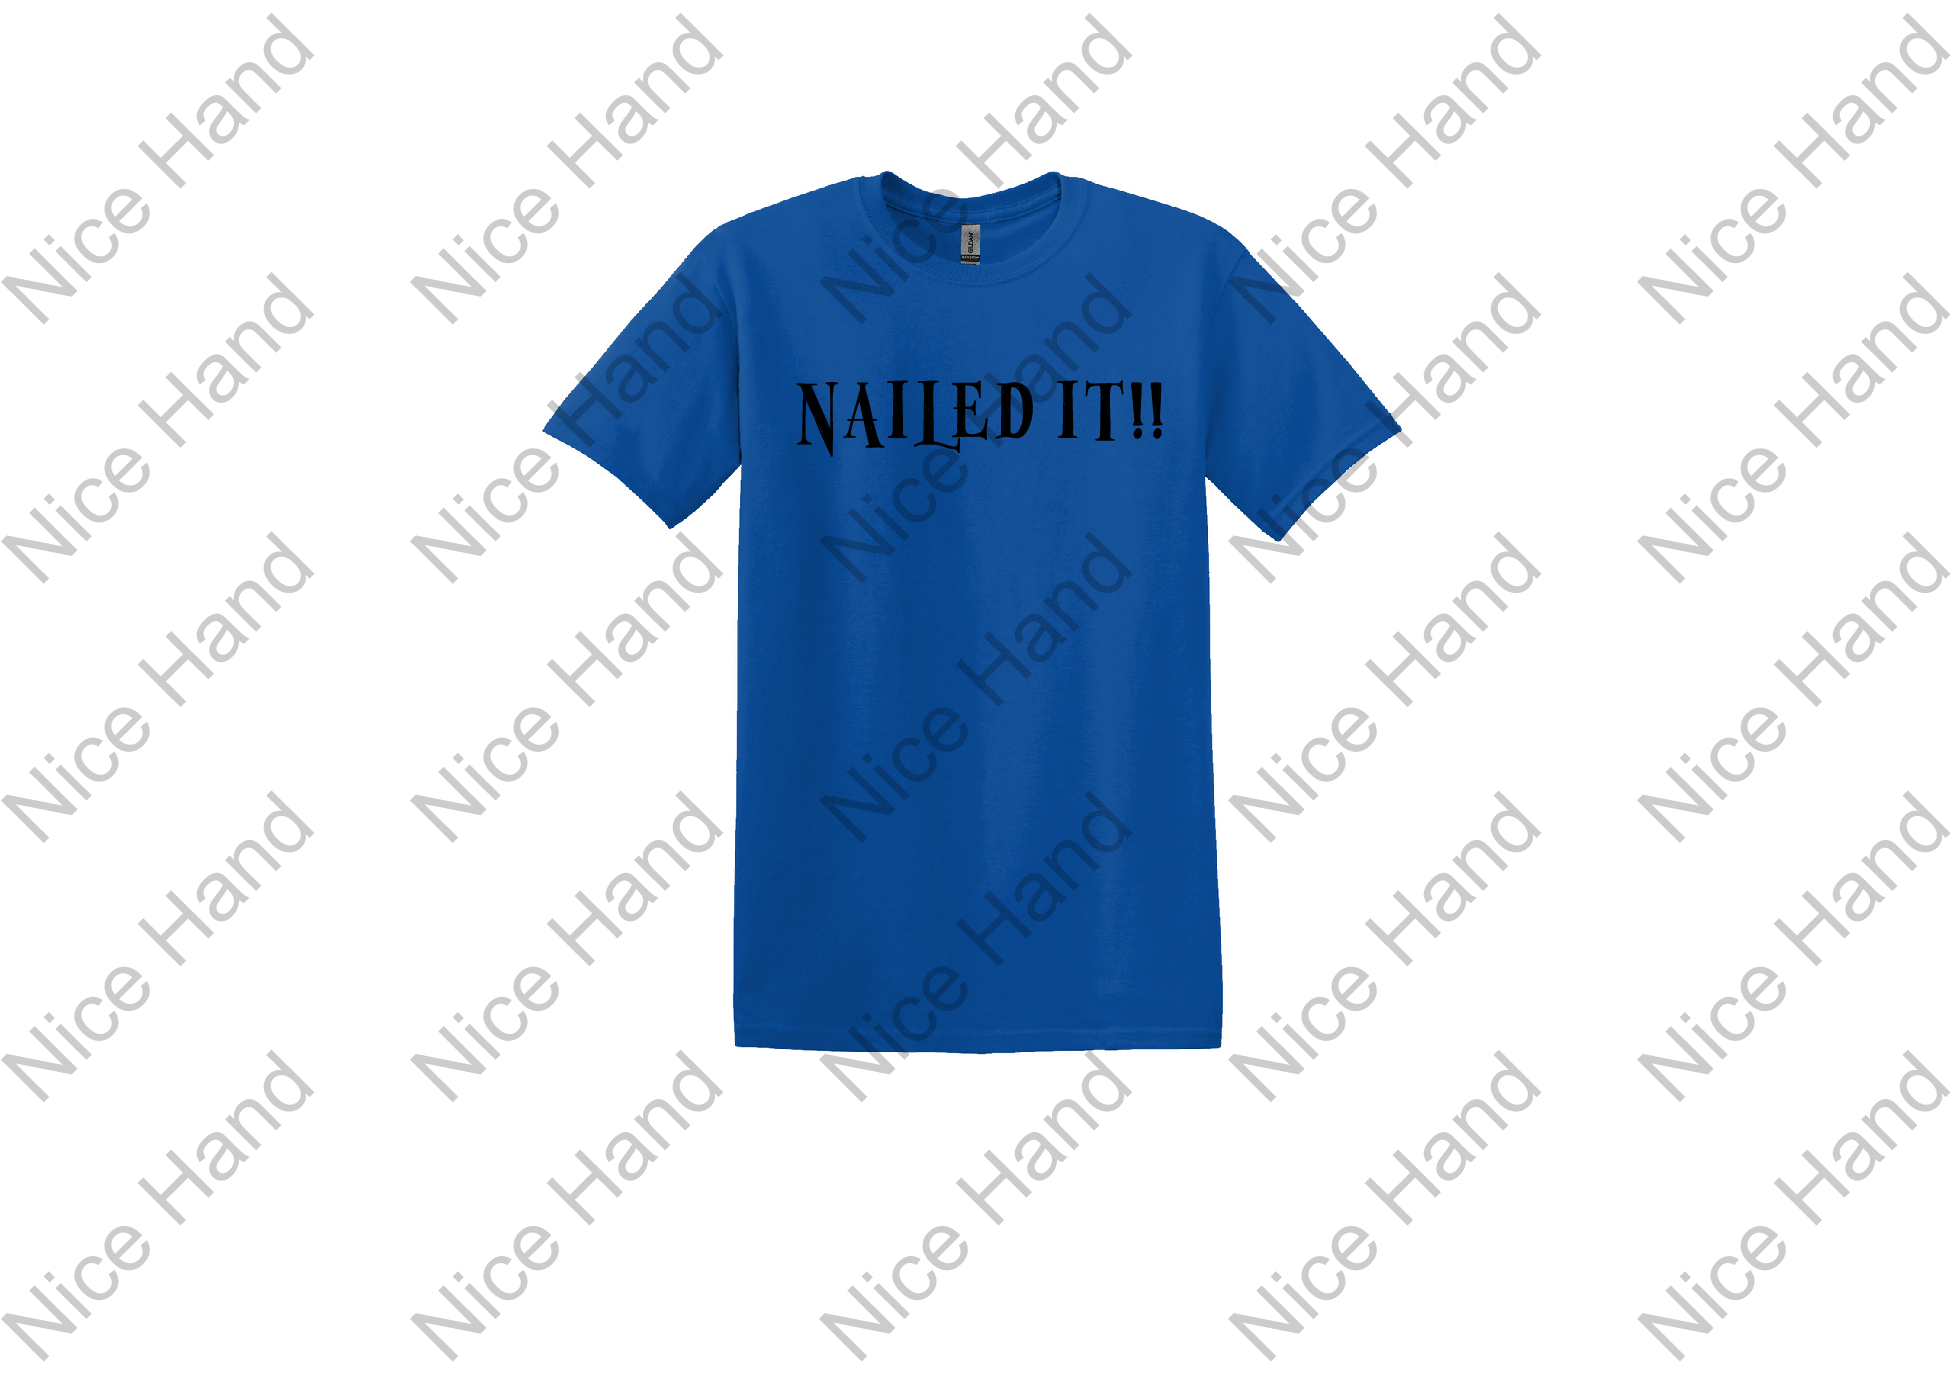 Nailed it!! T-shirt - Naileditblue_1